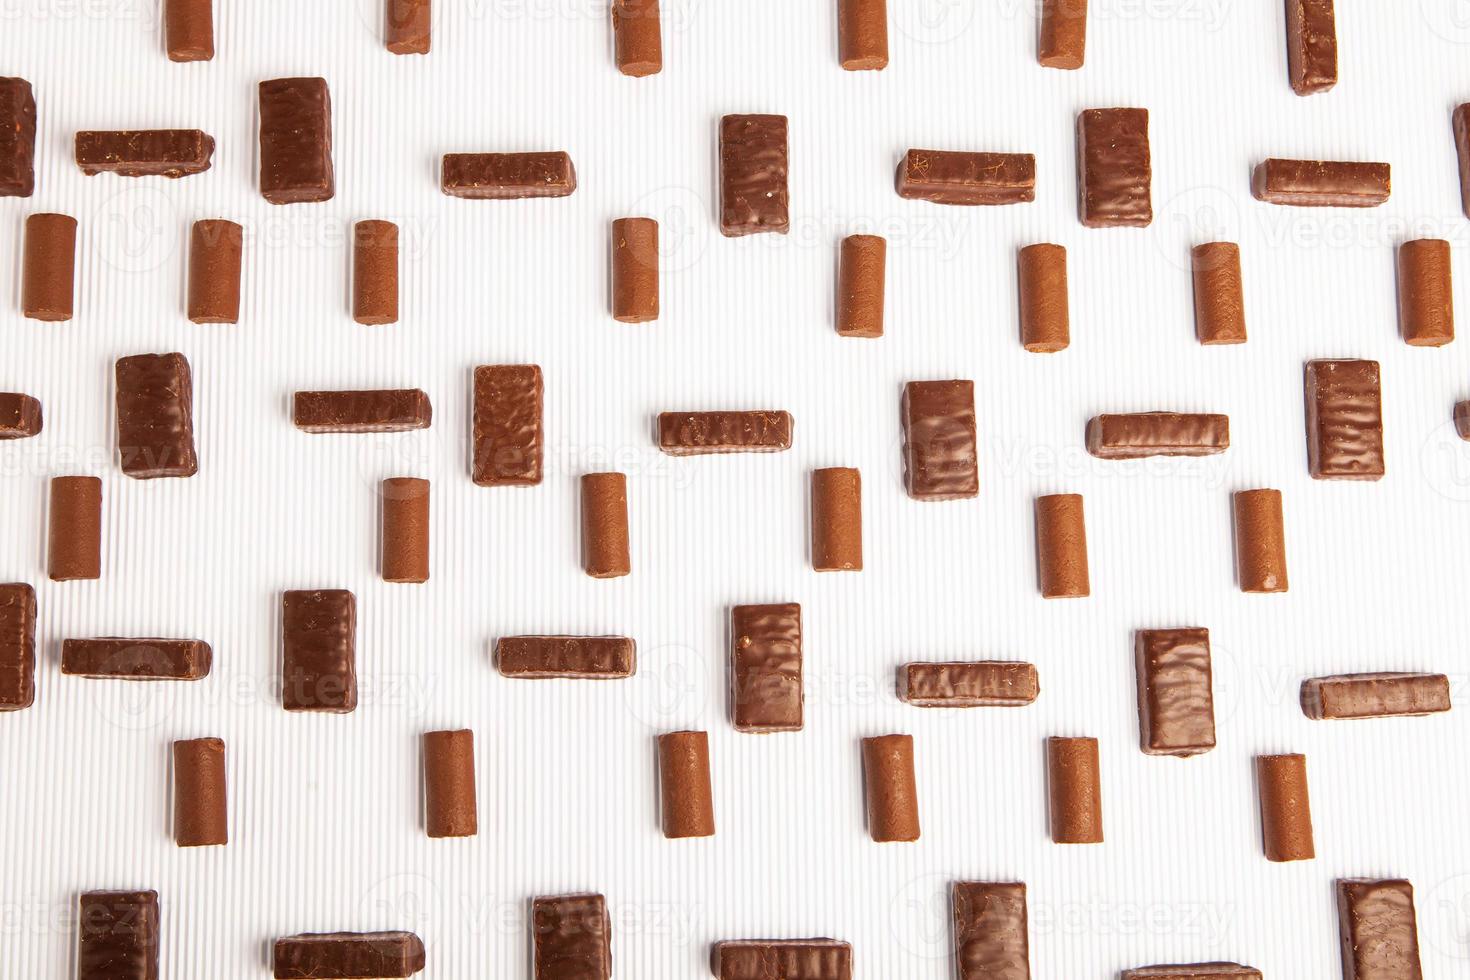 sortiment av läckra choklad godis bakgrund. choklad godis isolerade. foto